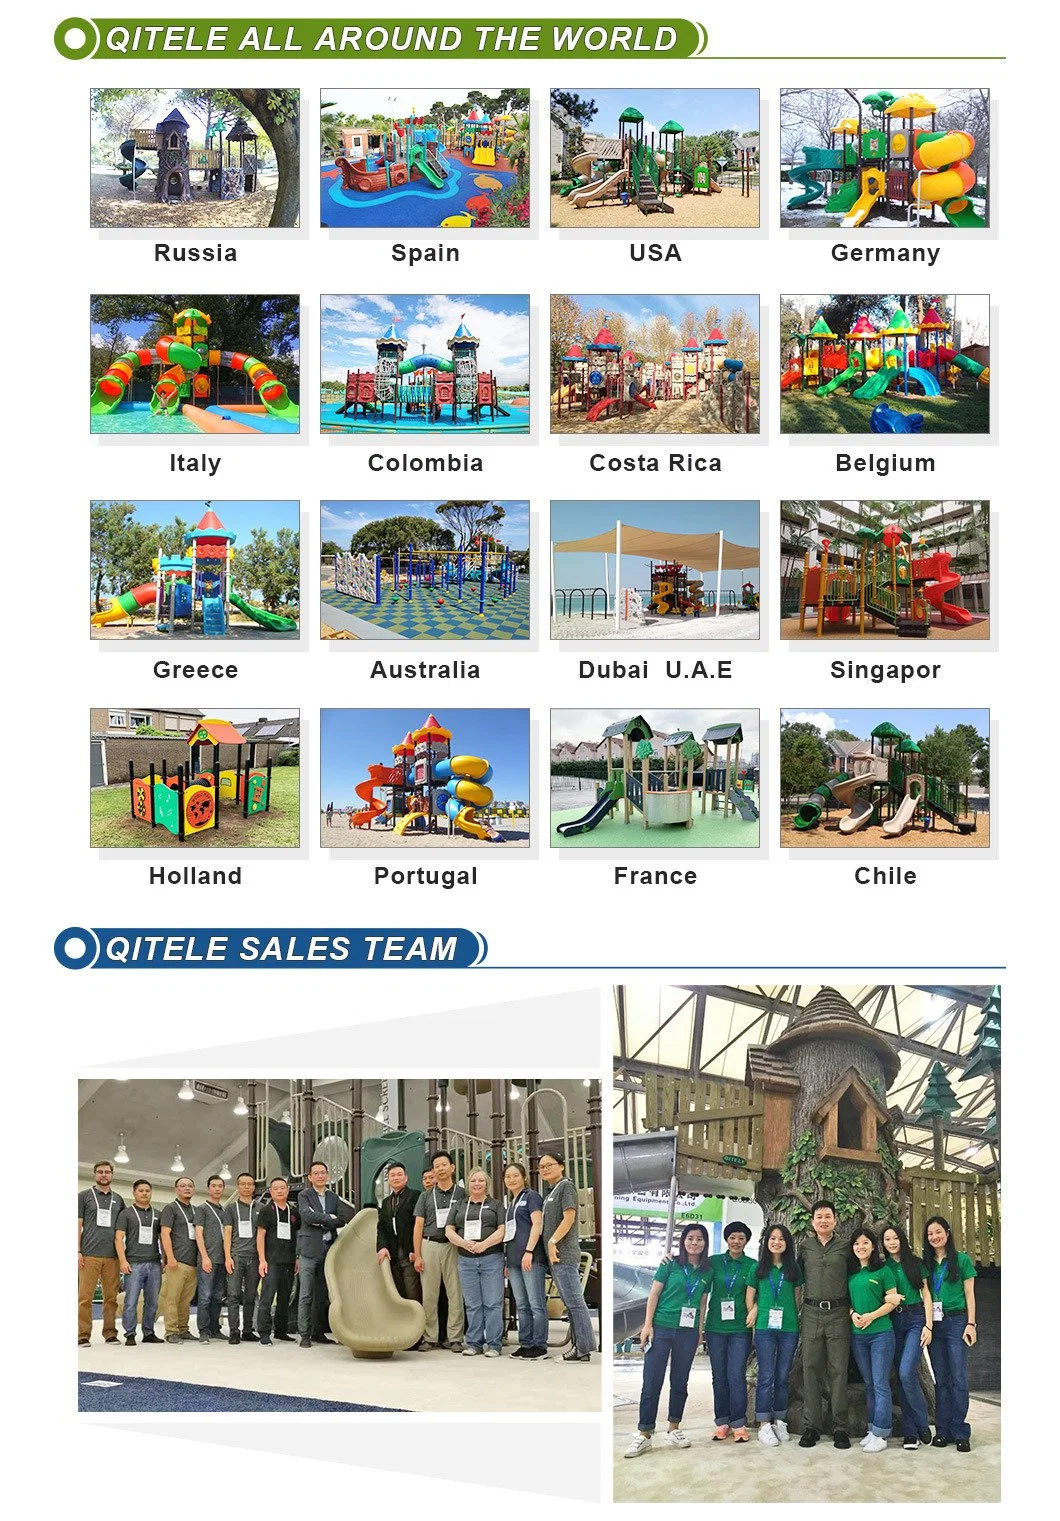 Amusement Park Outdoor Playground Equipment and Plastic Slide (TH-001)